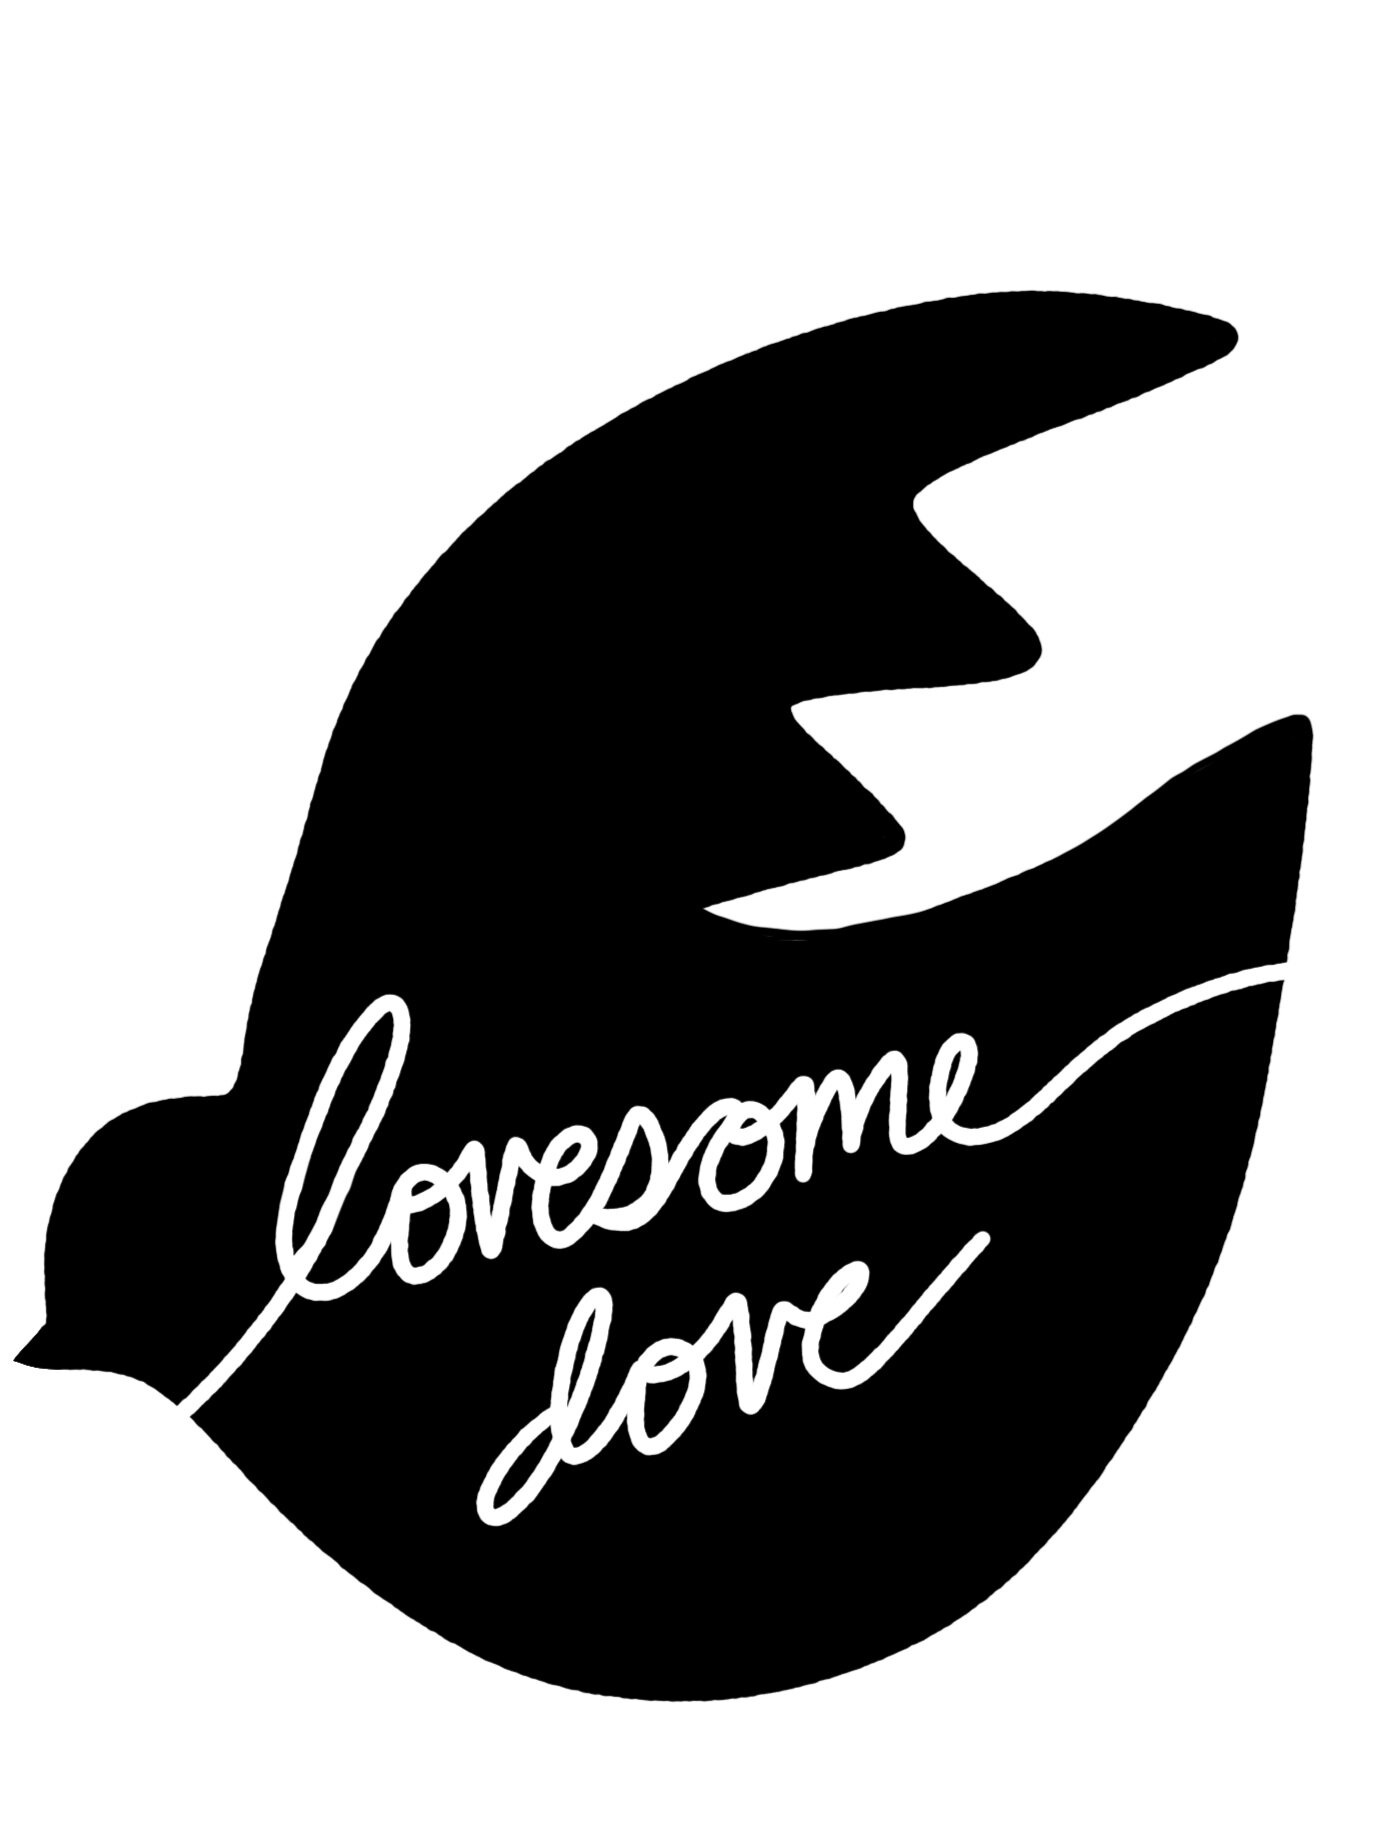 Lovesome Dove//angela larsen